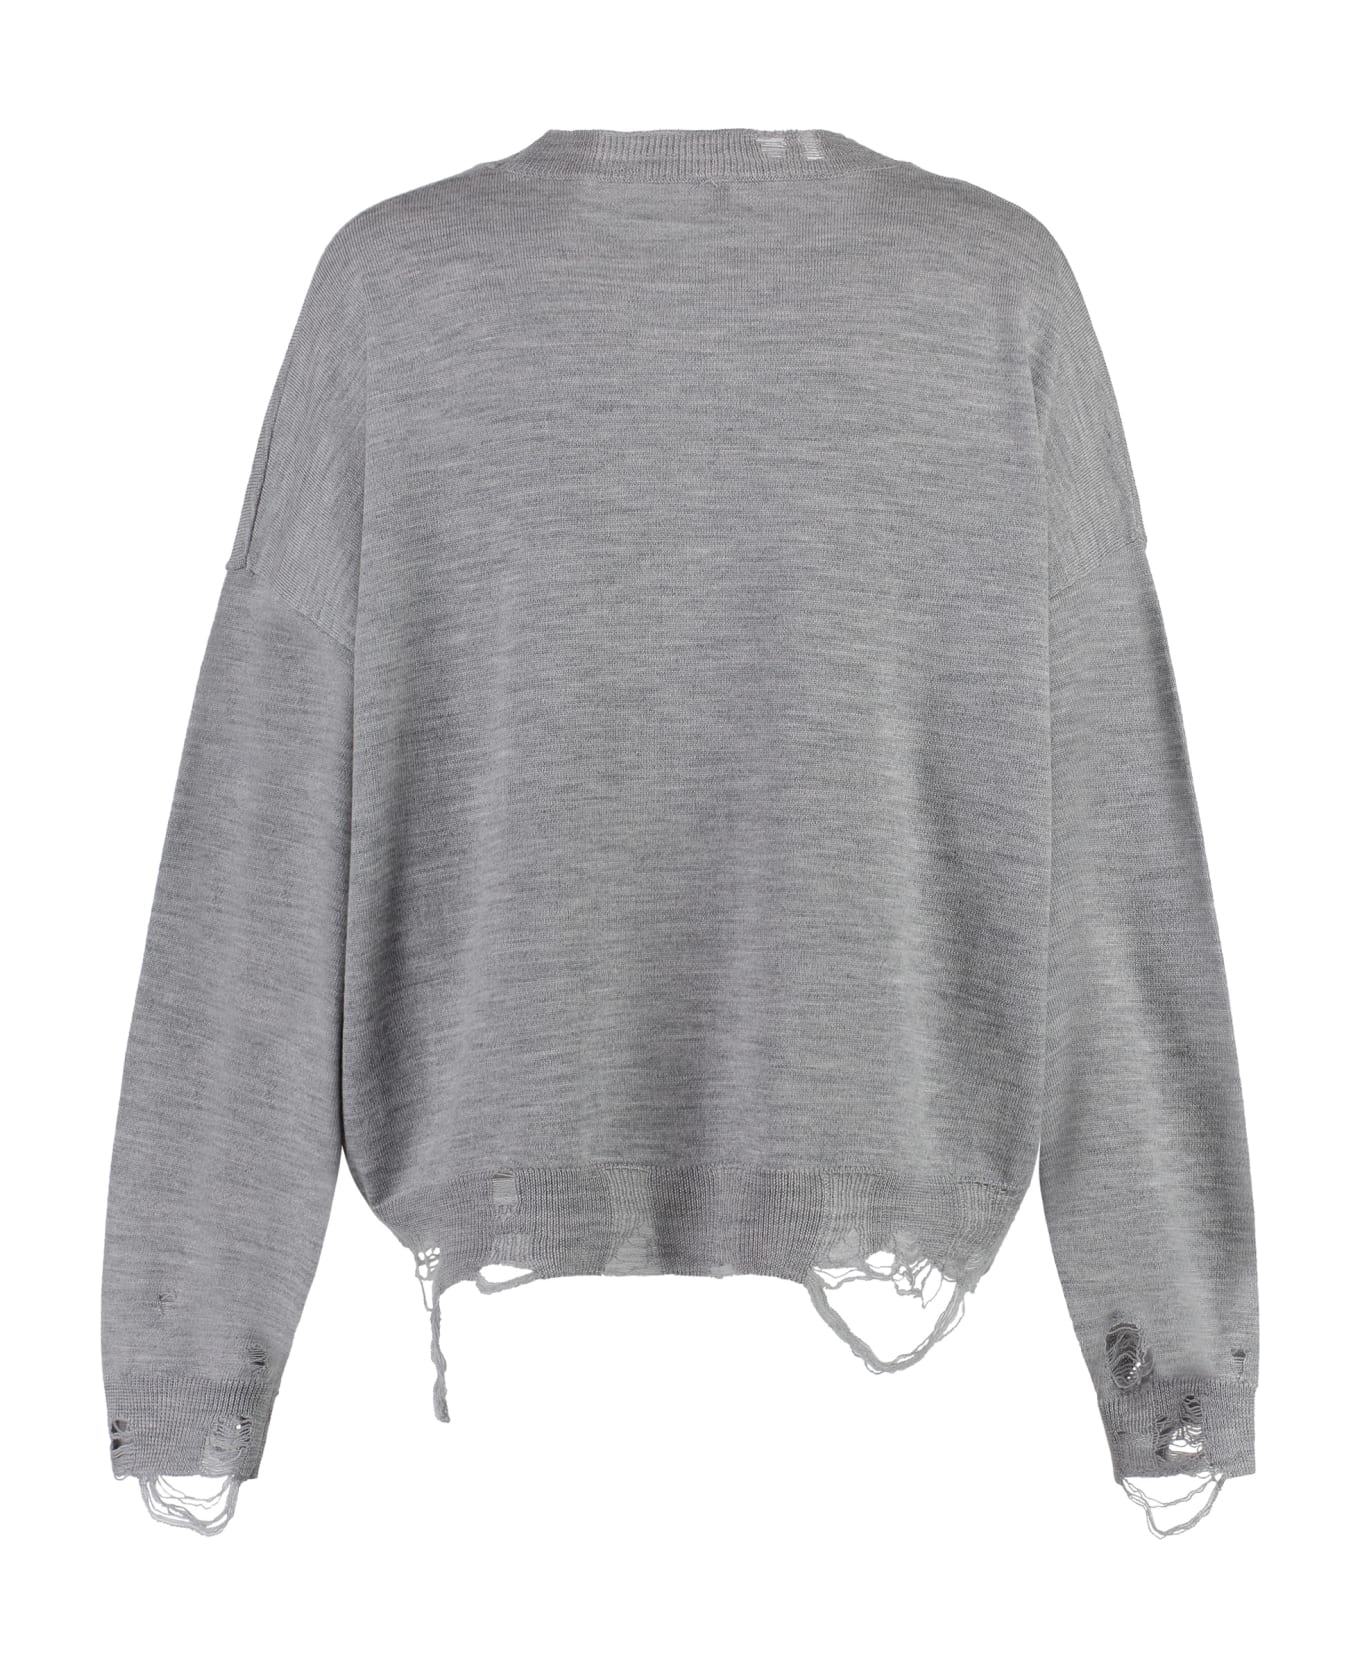 R13 Merino Wool Crew-neck Sweater - grey